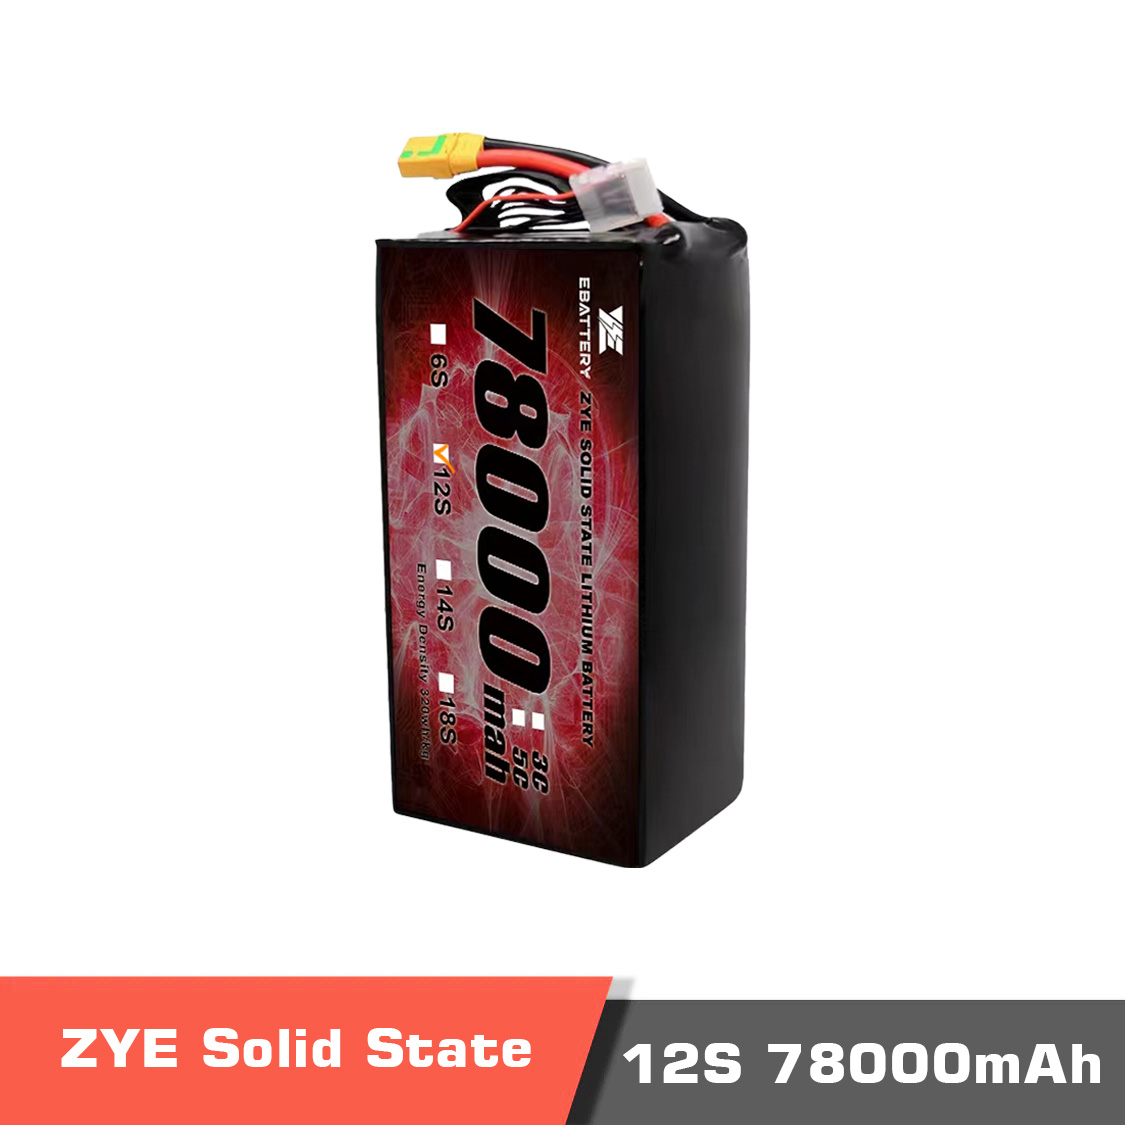 78000 12s temp.2 - ZYE Power Ultra HV Semi Solid-State Battery, Ultra HV Semi Solid-State Battery, 14S 78000mAh high voltage LiPo Battery, 14S 78000mAh HV LiPo Battery, Solid-state LiPo battery, lipo battery, drone battery, 14s battery, high energy density battery, UAV, drone, vtol, ZYE Power, ZYE power Battery - MotioNew - 1